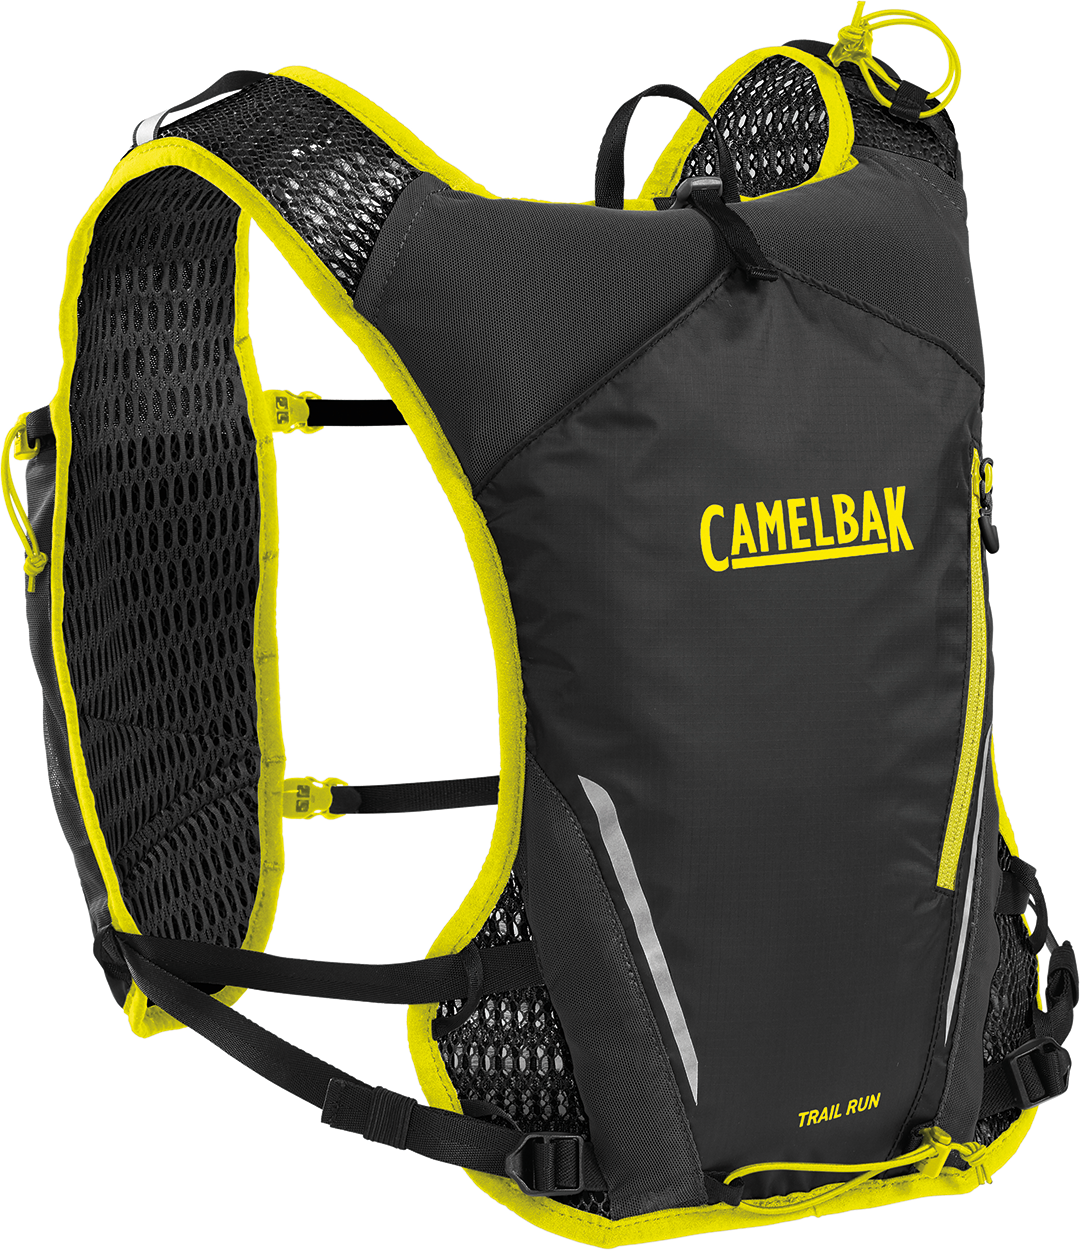 Camelbak Trail Run Vest 34 Black/Safety Yellow